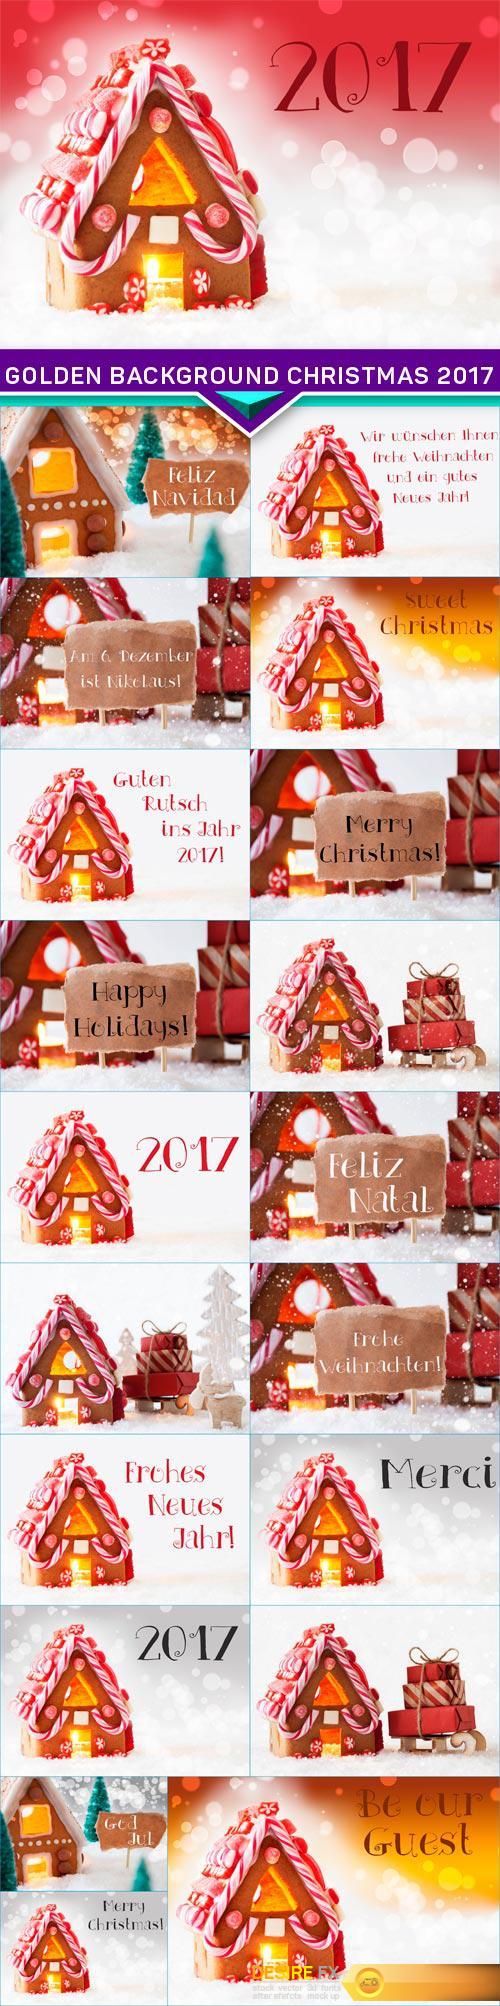 Gingerbread House, Golden Background Christmas 2017 20X JPEG